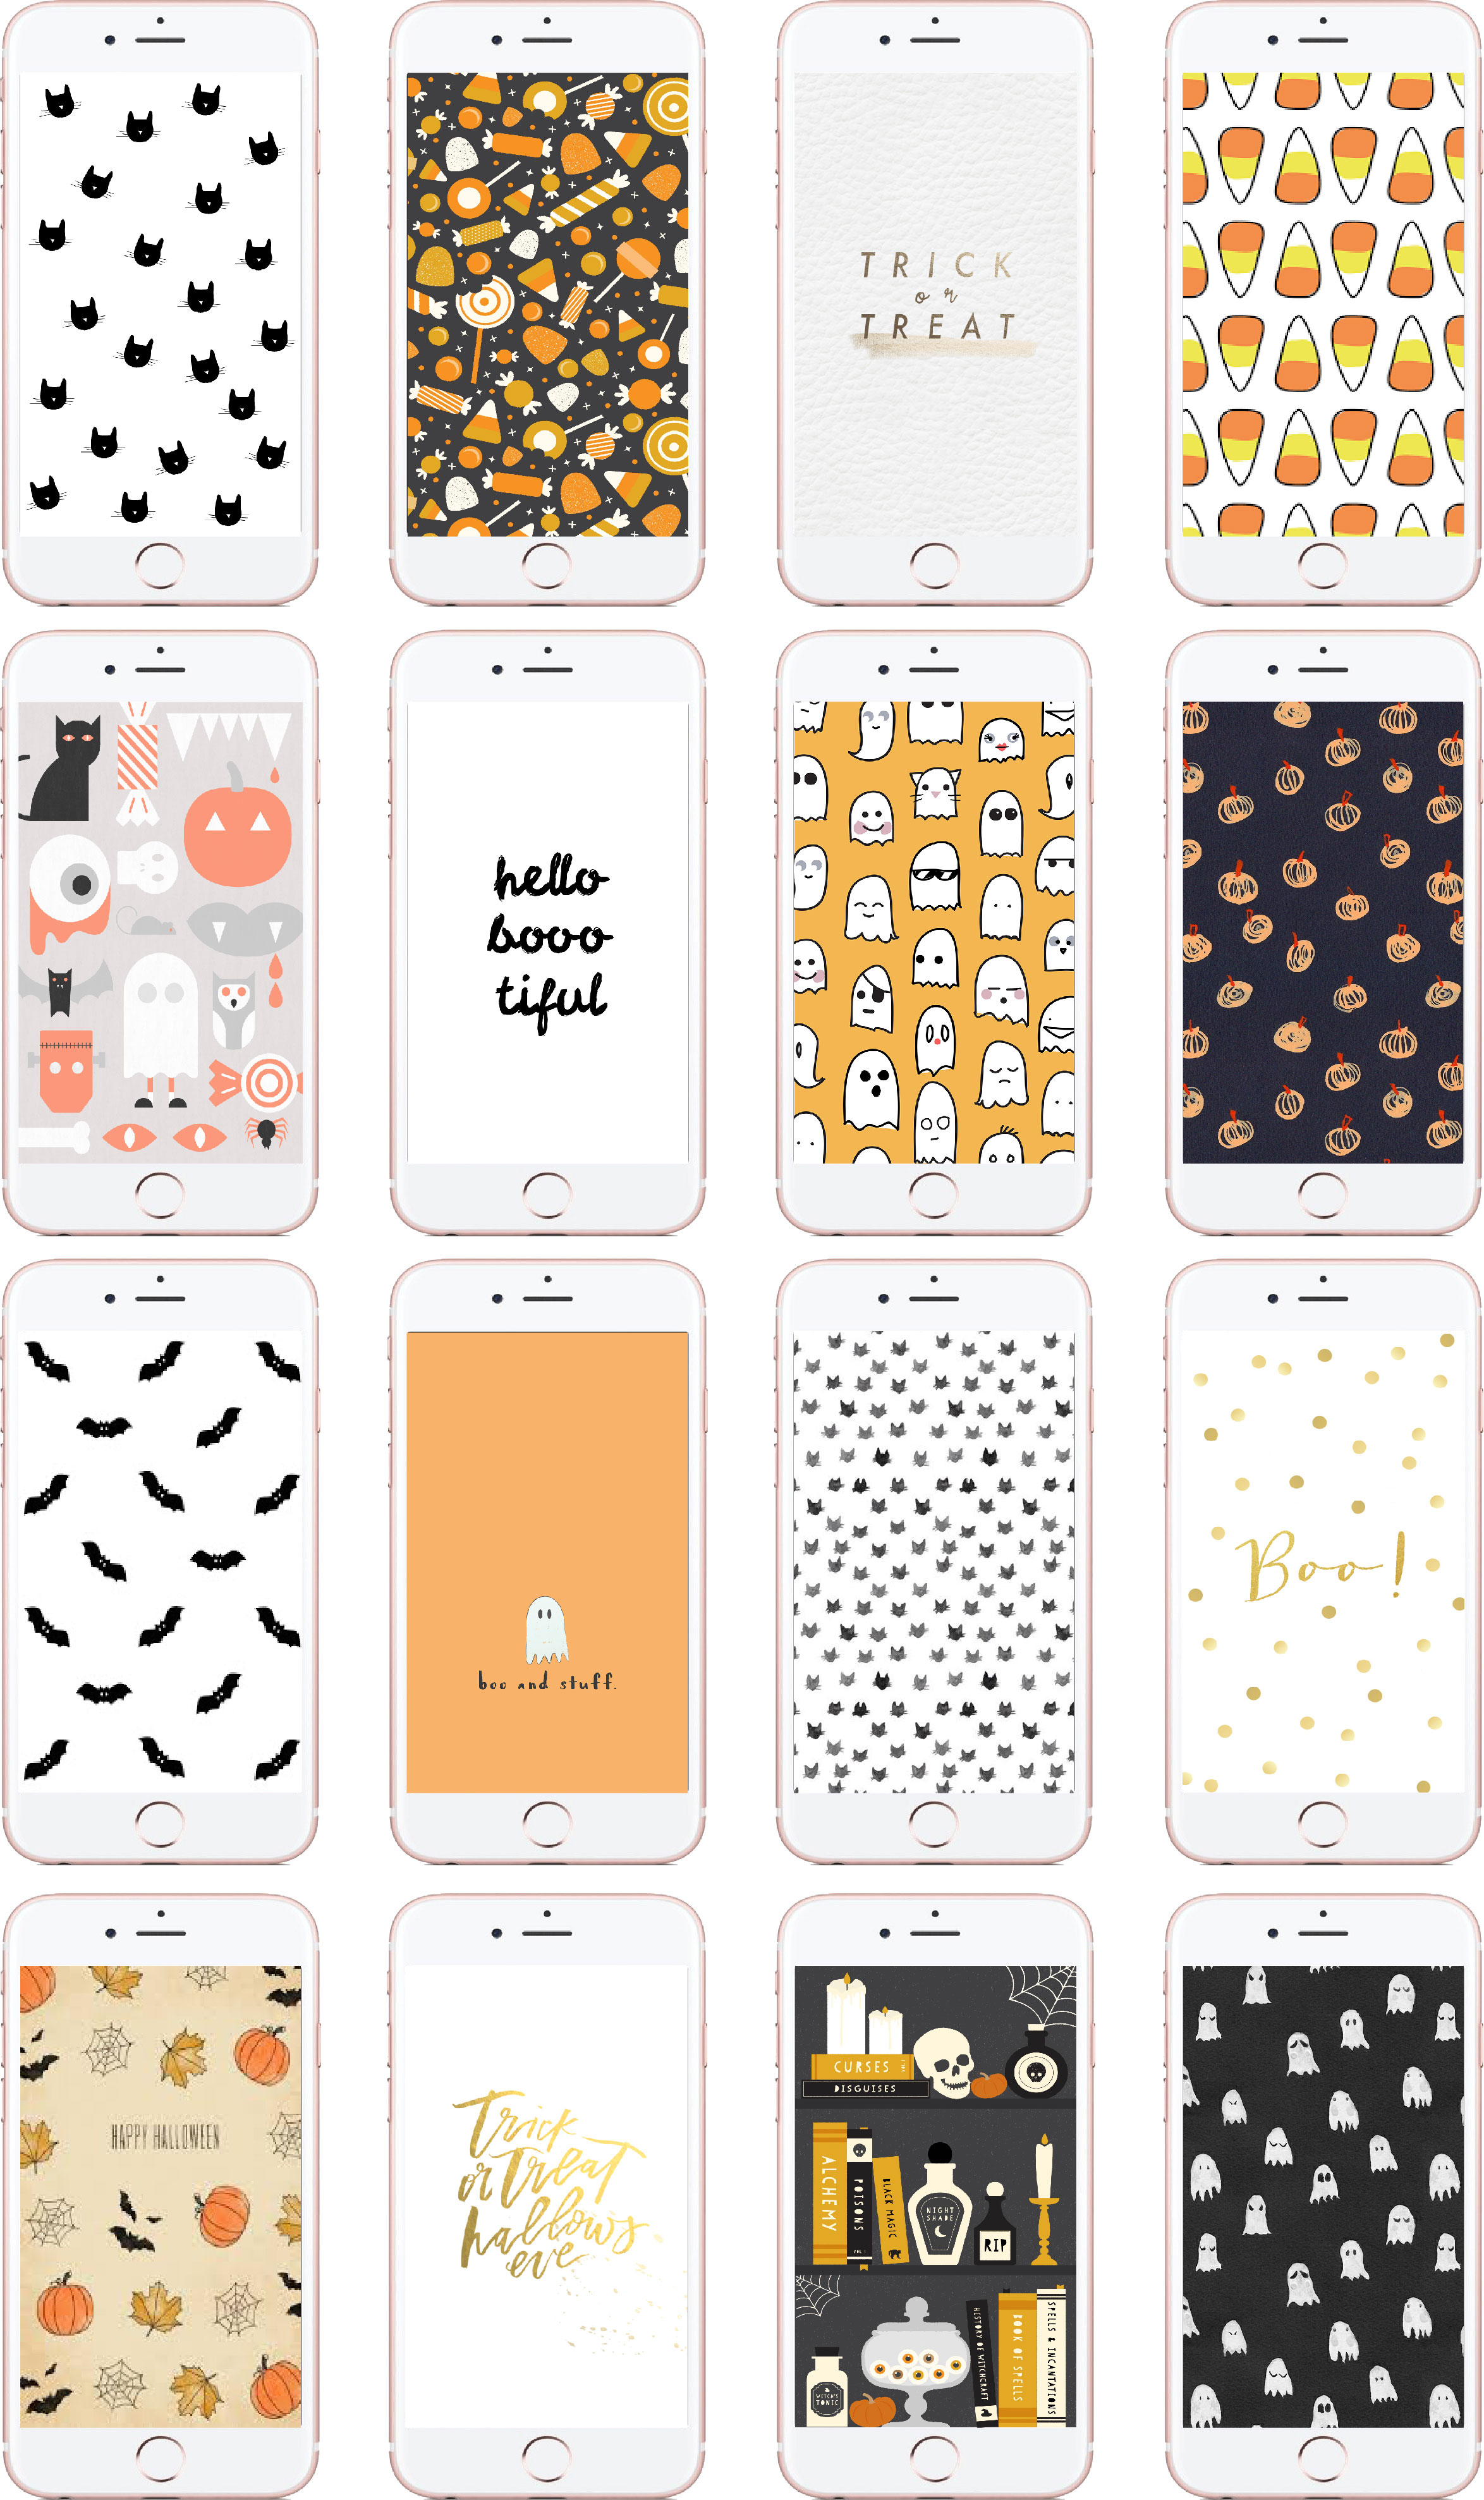 16 Festive iPhone Wallpaper Designs for Halloween | ShellyMade